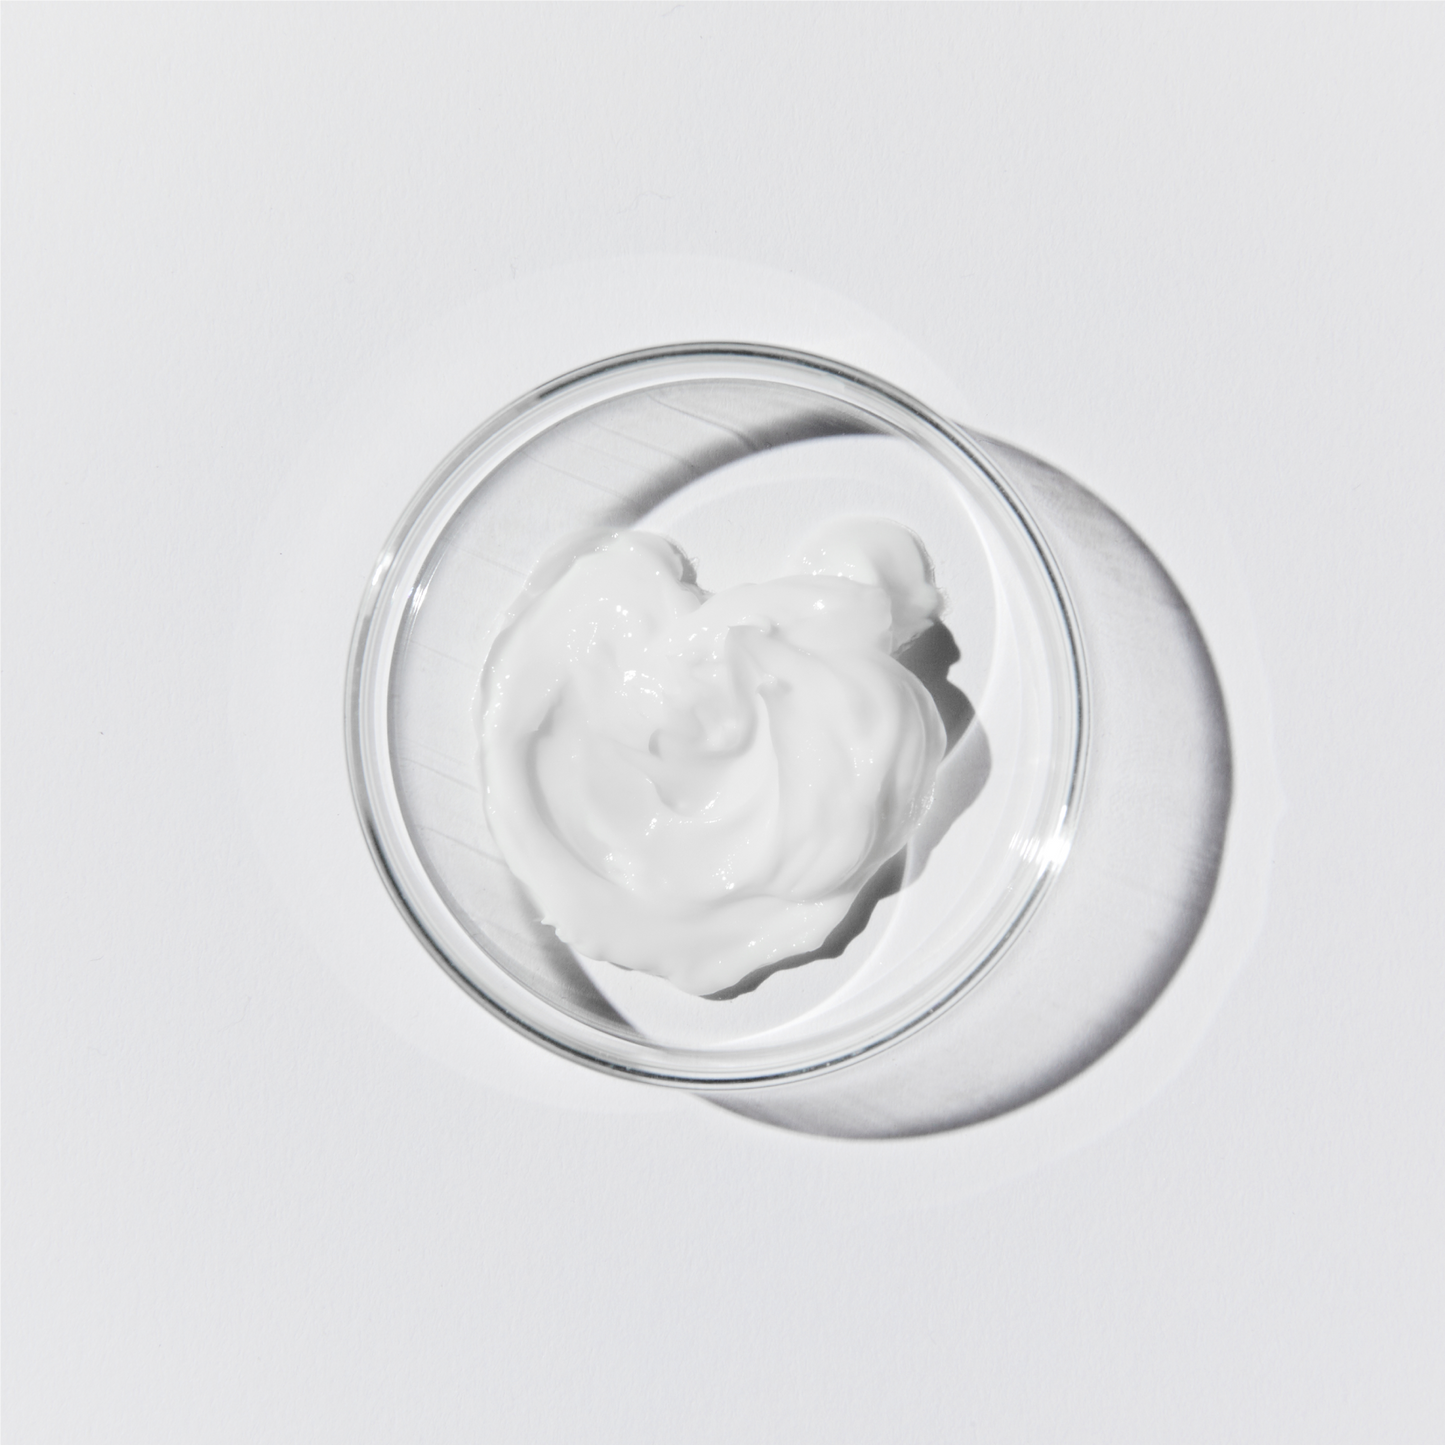 Aerial shot of the calm cream. Its an opaque, white liquid in a petri dish against a white background.